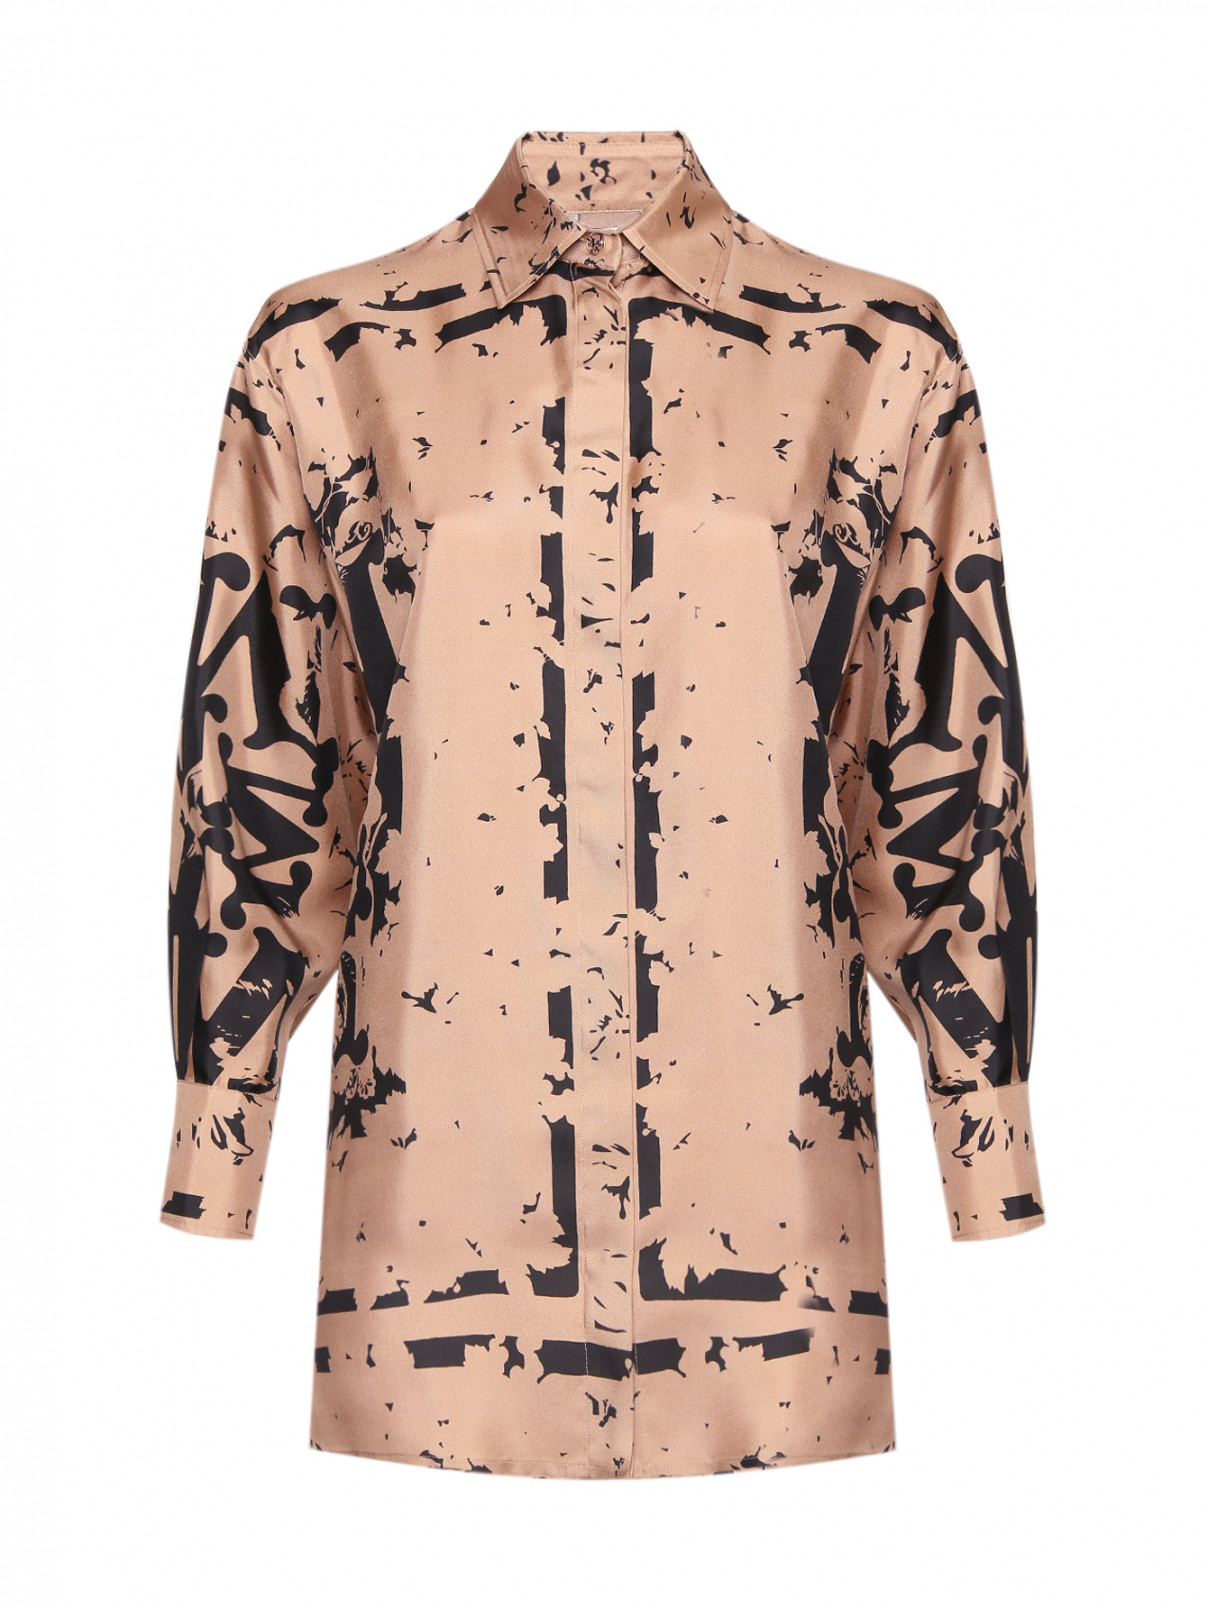 Блуза из шелка с узором Max Mara  –  Общий вид  – Цвет:  Бежевый